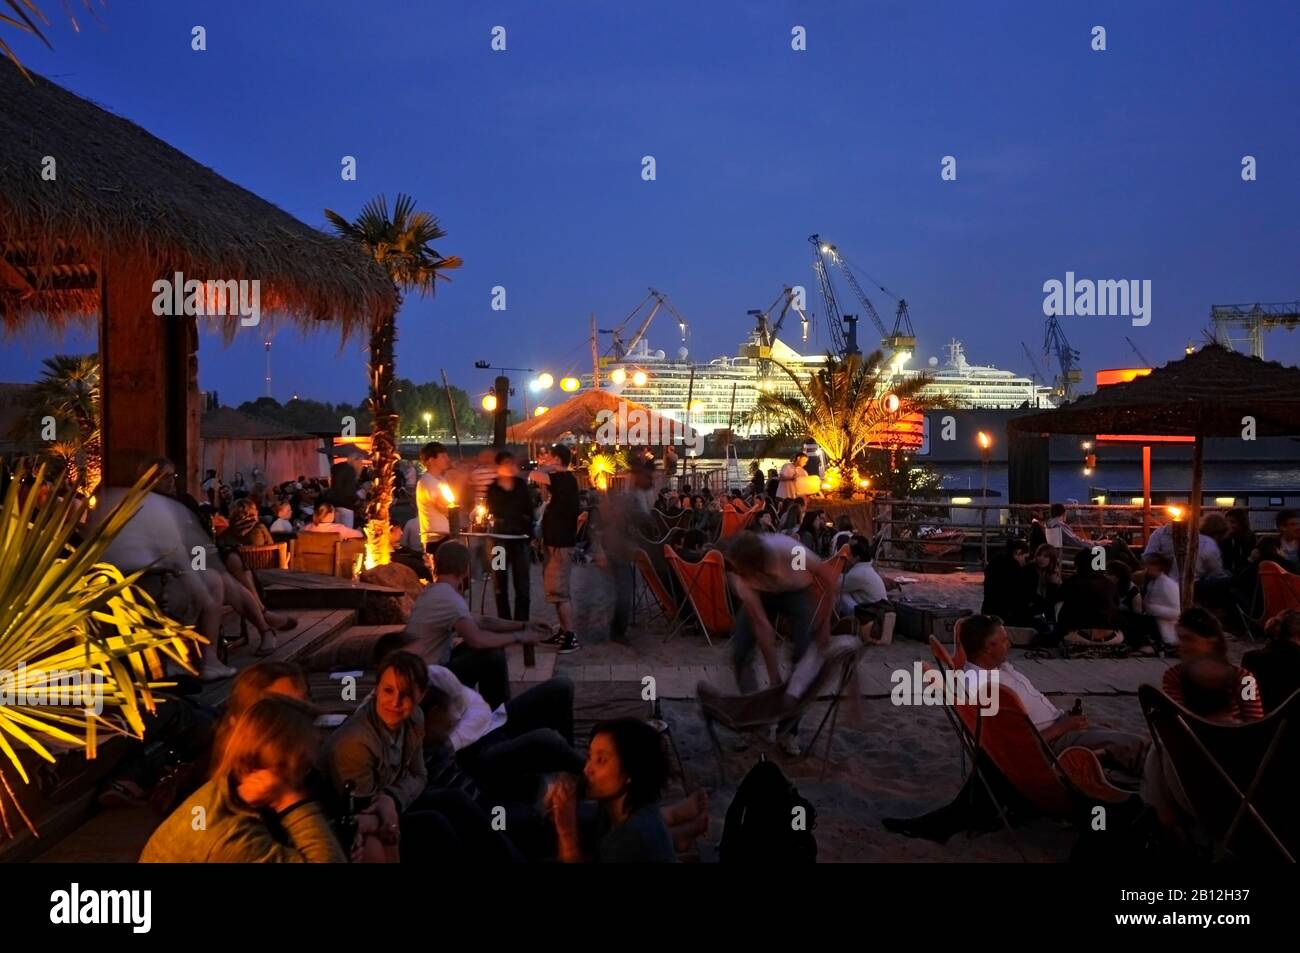 Strandpauli Beach Club with guests,summer atmosphere at night,Hamburg,Germany,Europe Stock Photo